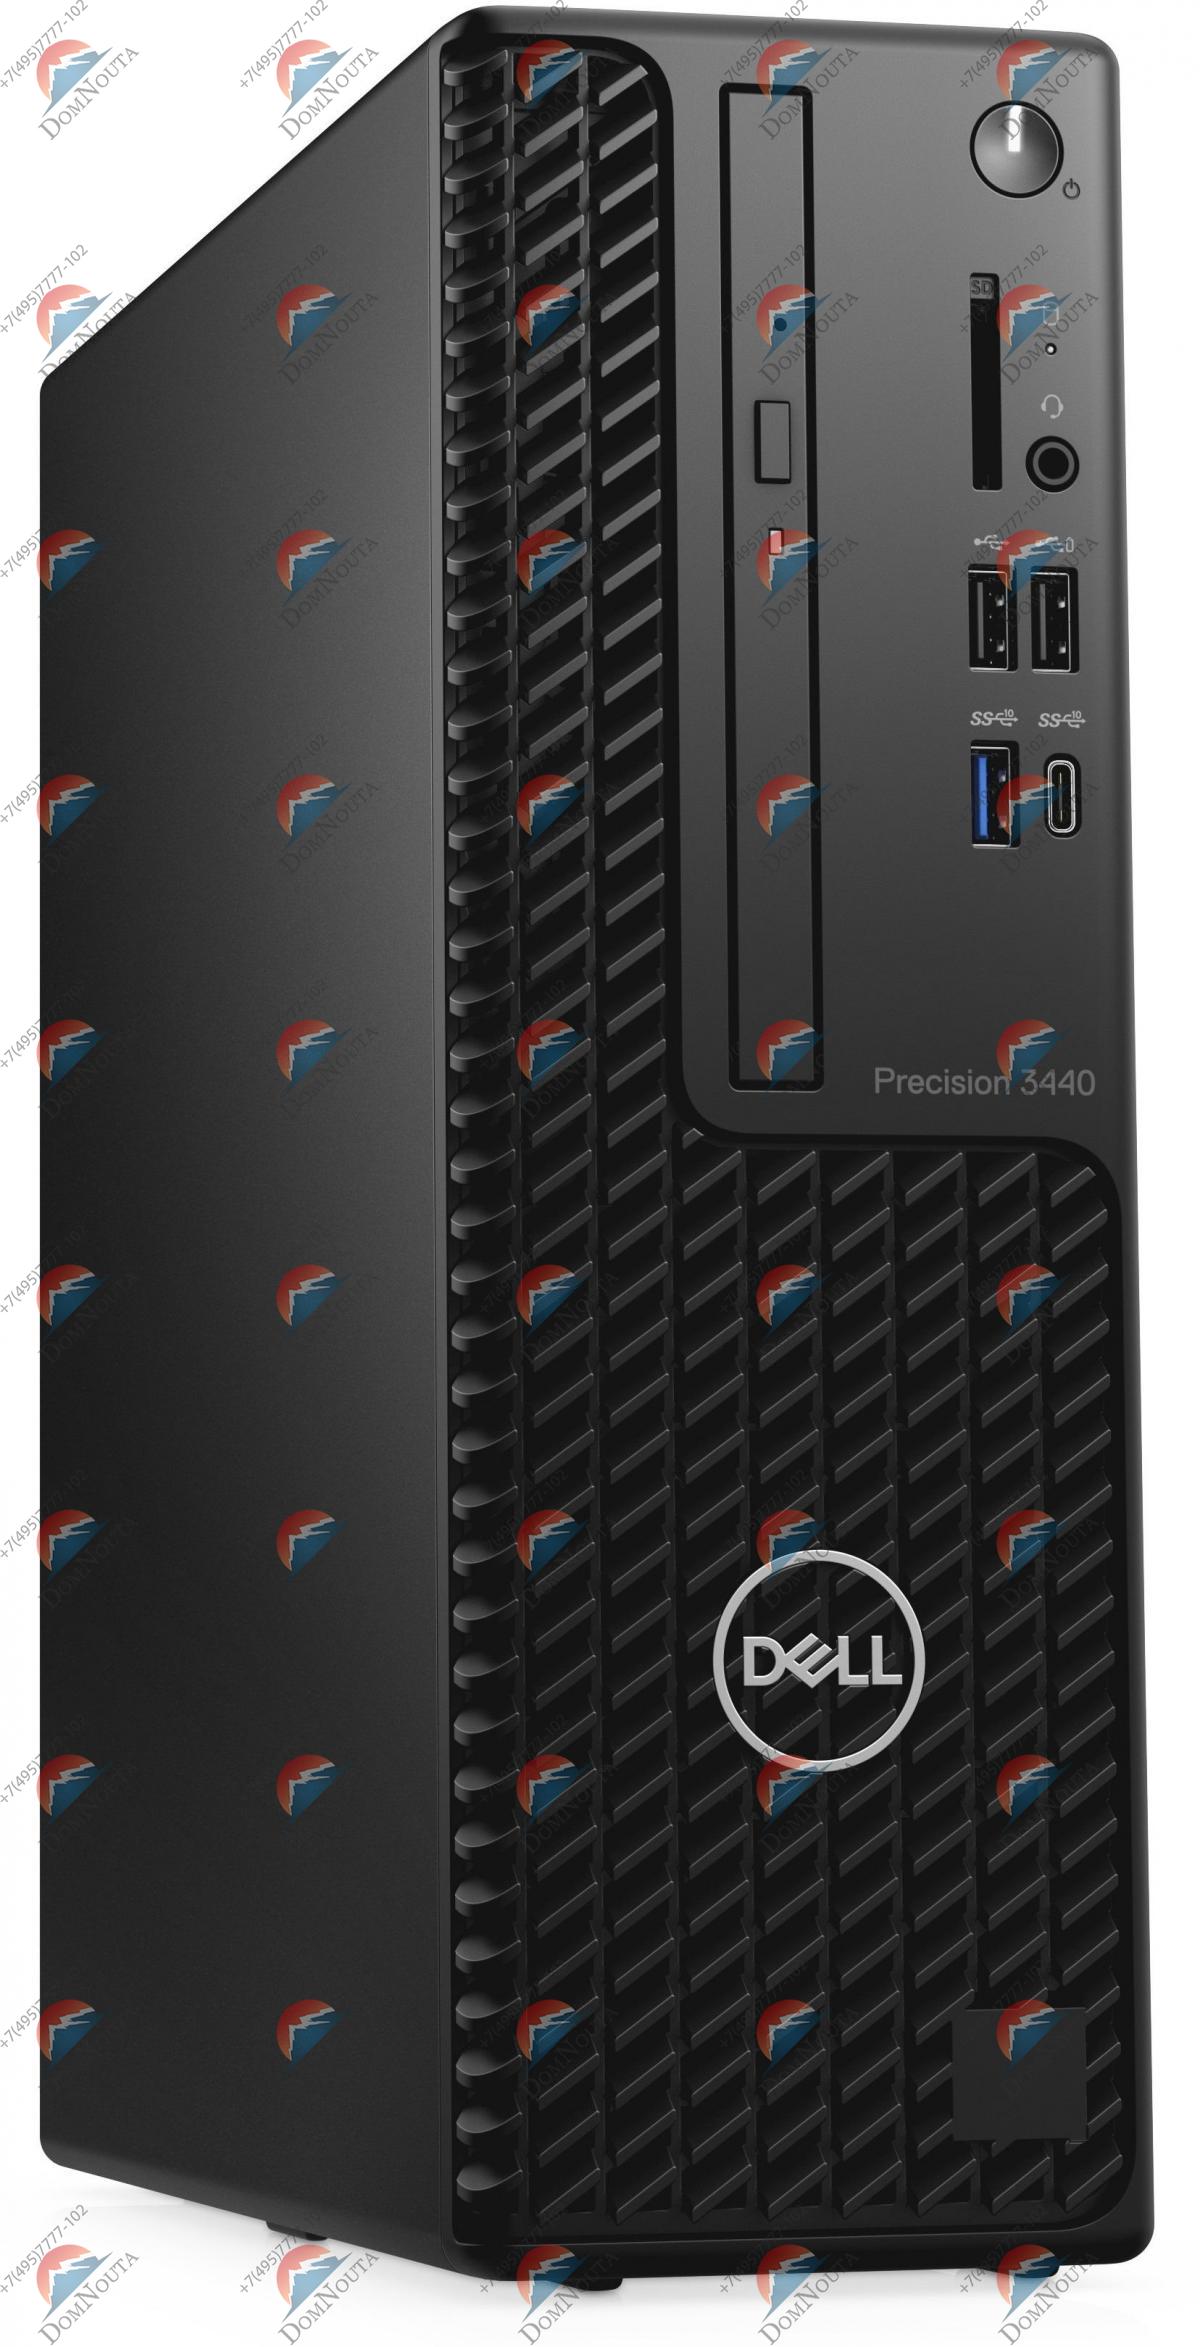 Системный блок Dell Precision 3440 SFF